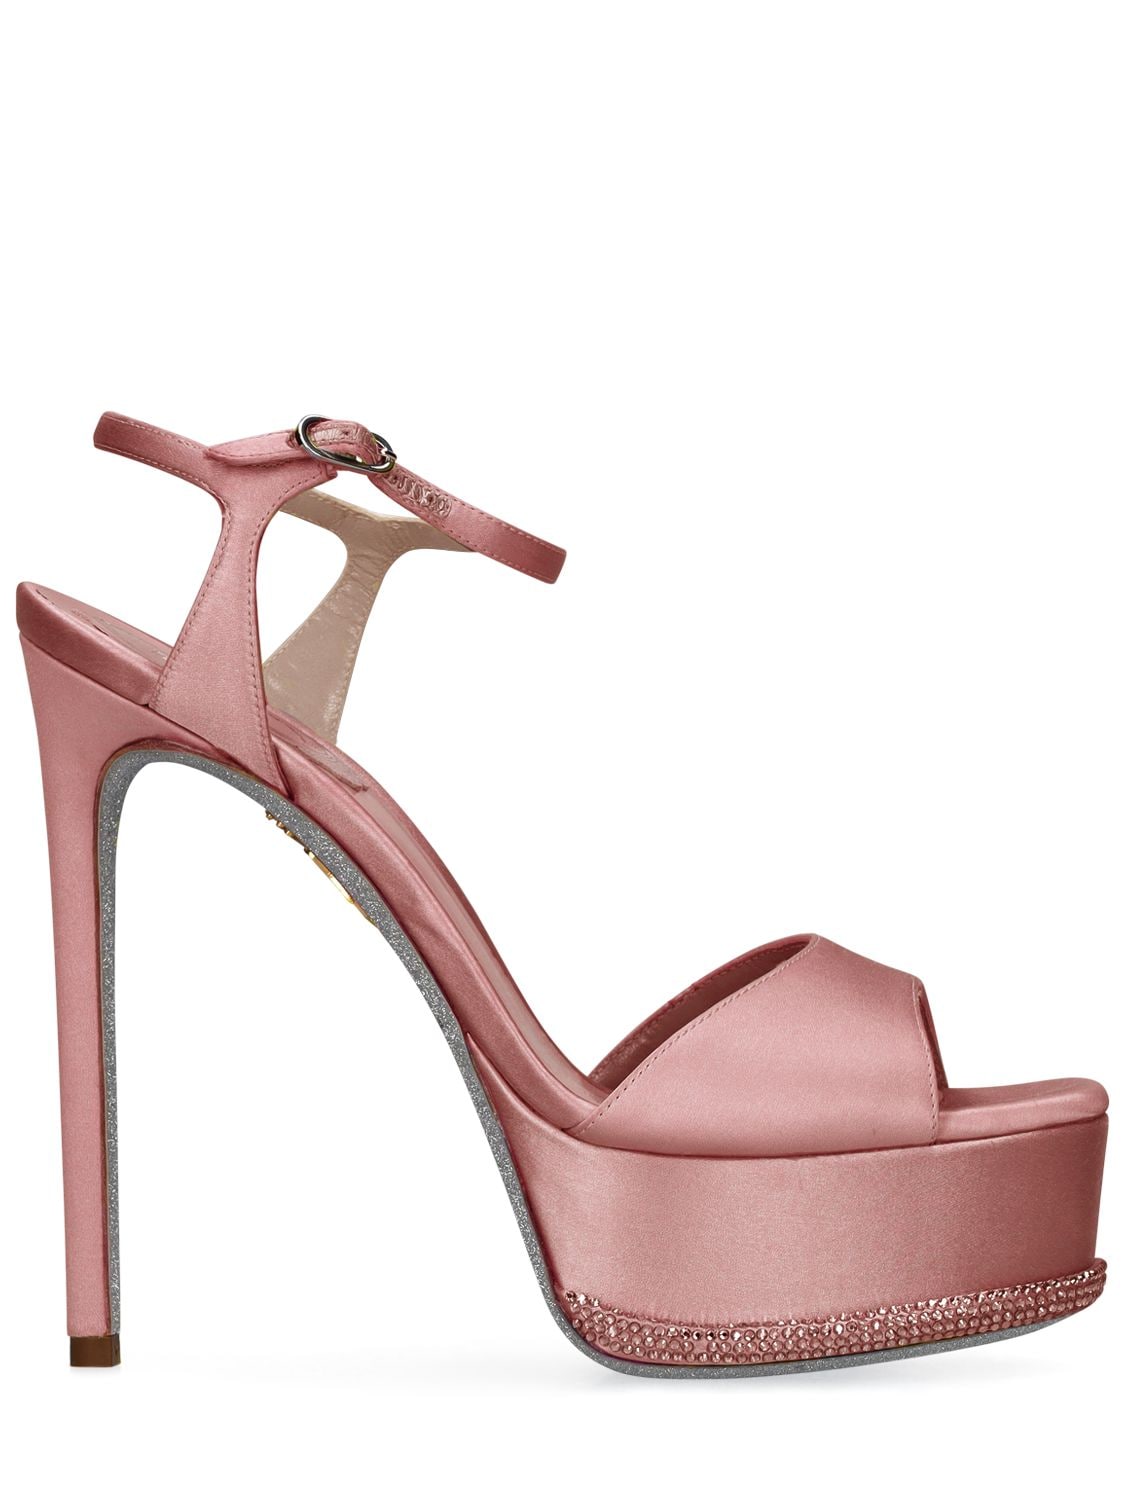 René Caovilla 130mm Satin High Heel Sandals In Pink